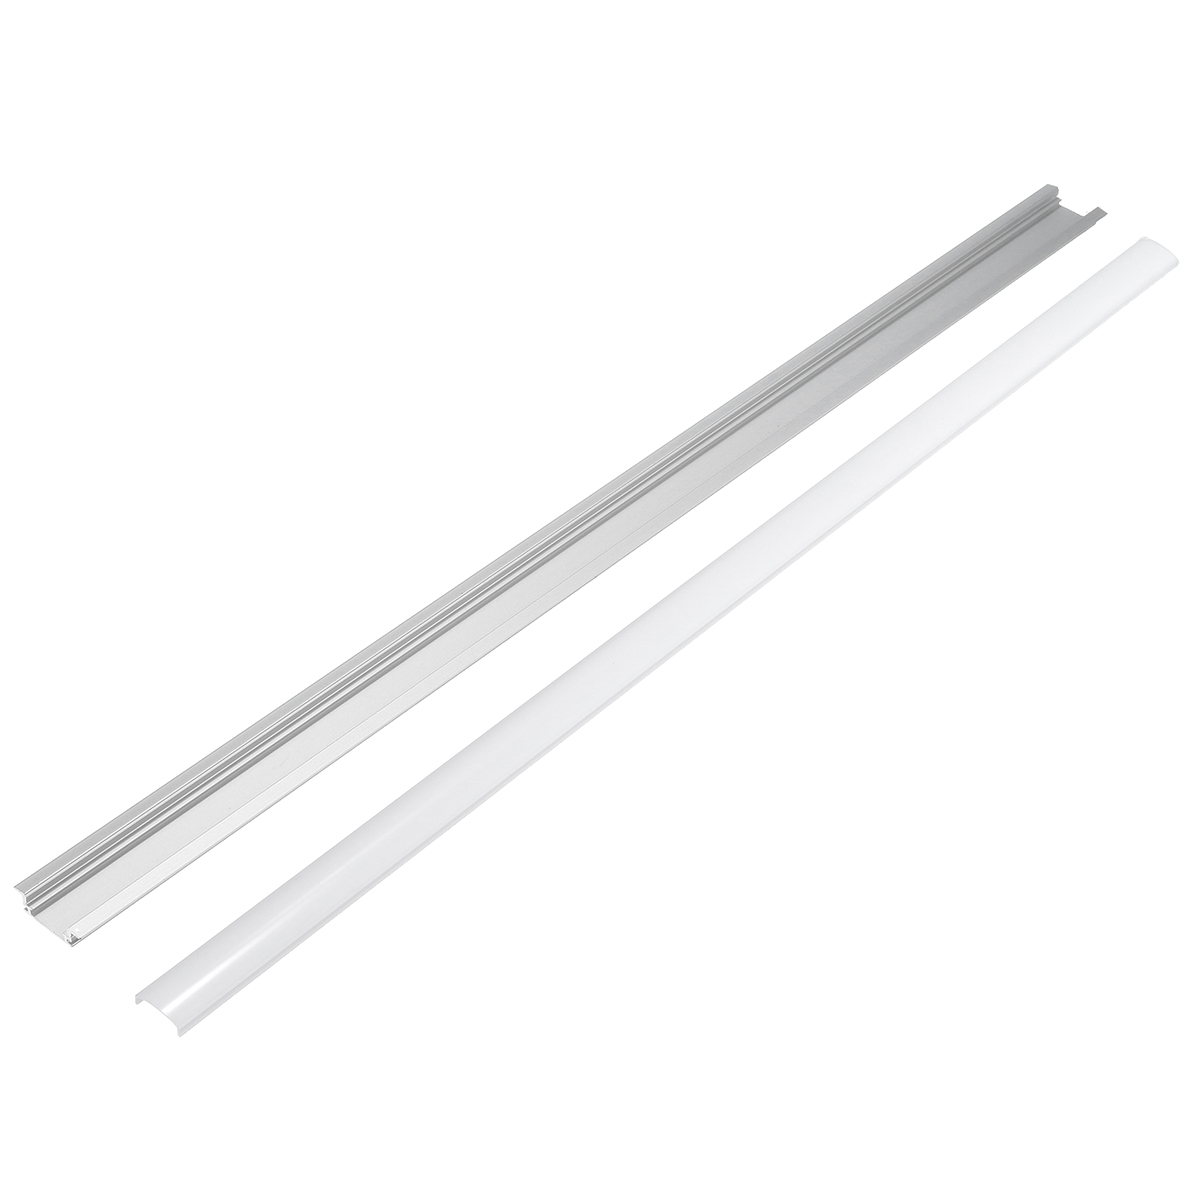 45Cm U/V/YW Style Aluminium Channel Holder for LED Strip Light Bar Cabinet Lamp